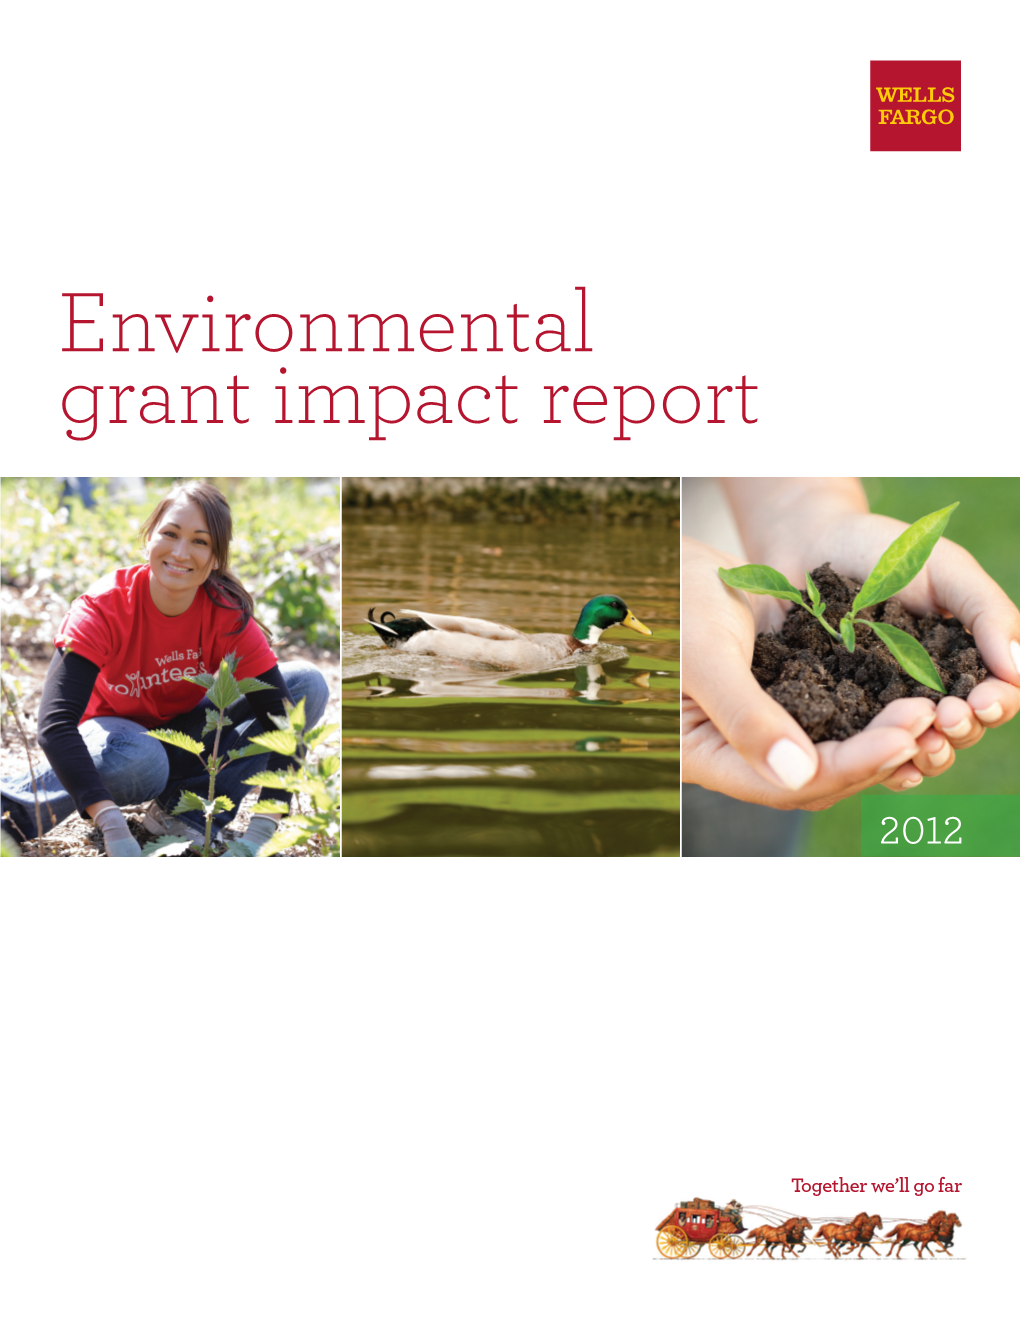 Wells Fargo 2012 Environmental Grant Impact Report